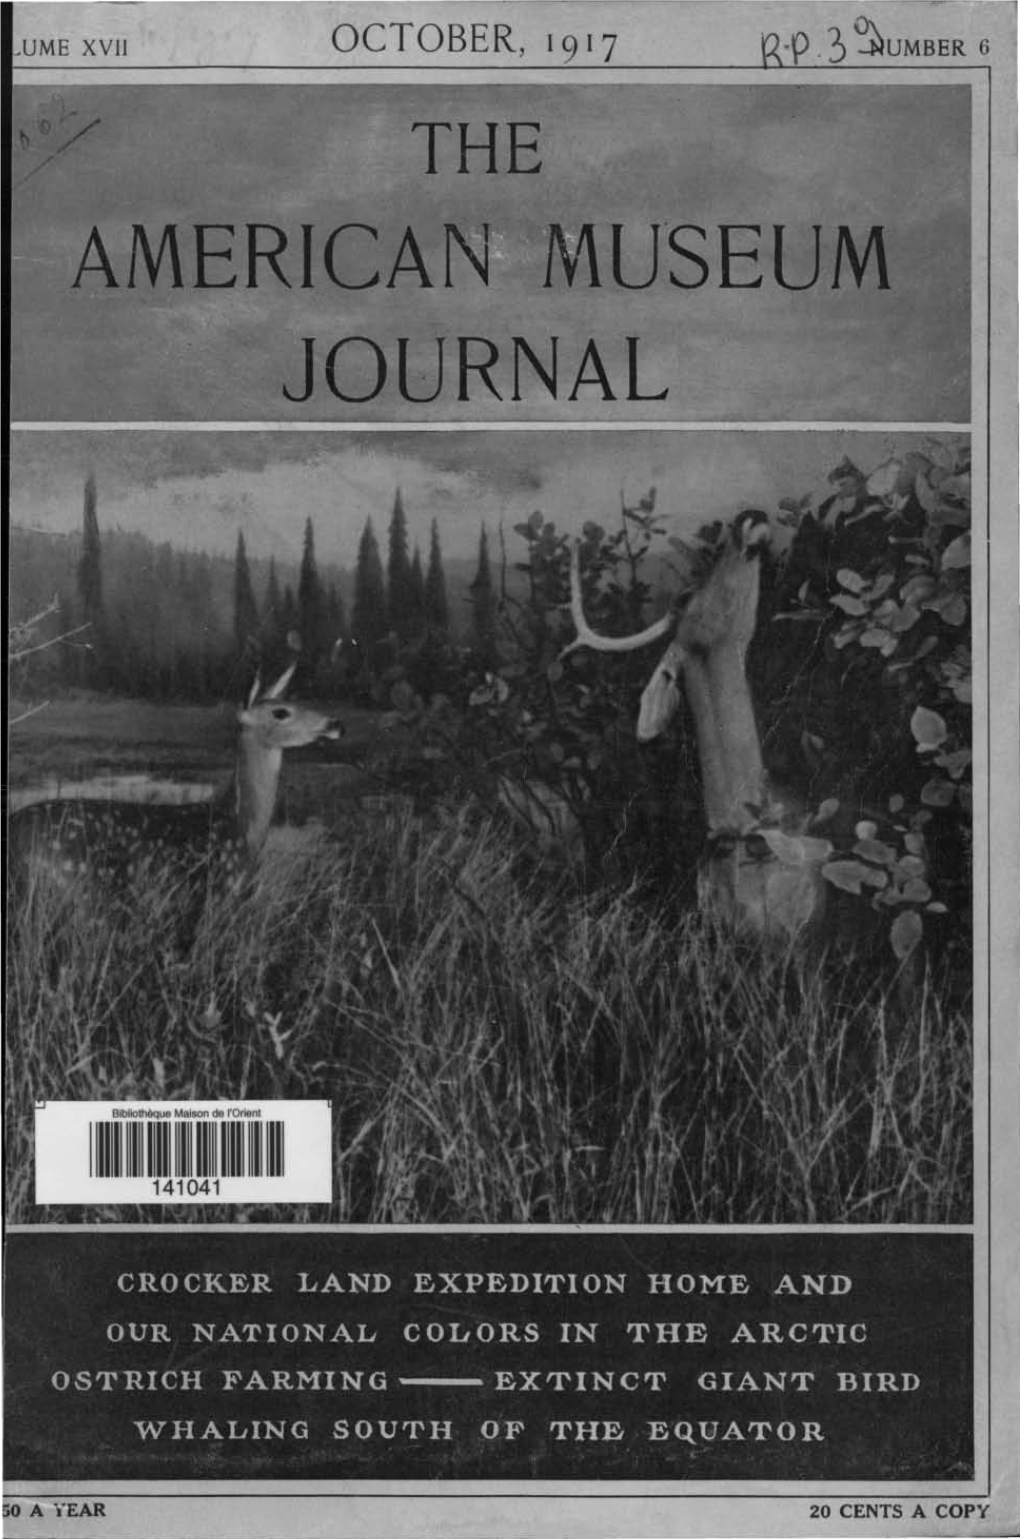 AMERICAM MU'seum . JOURNAL the American Museum of Natural History